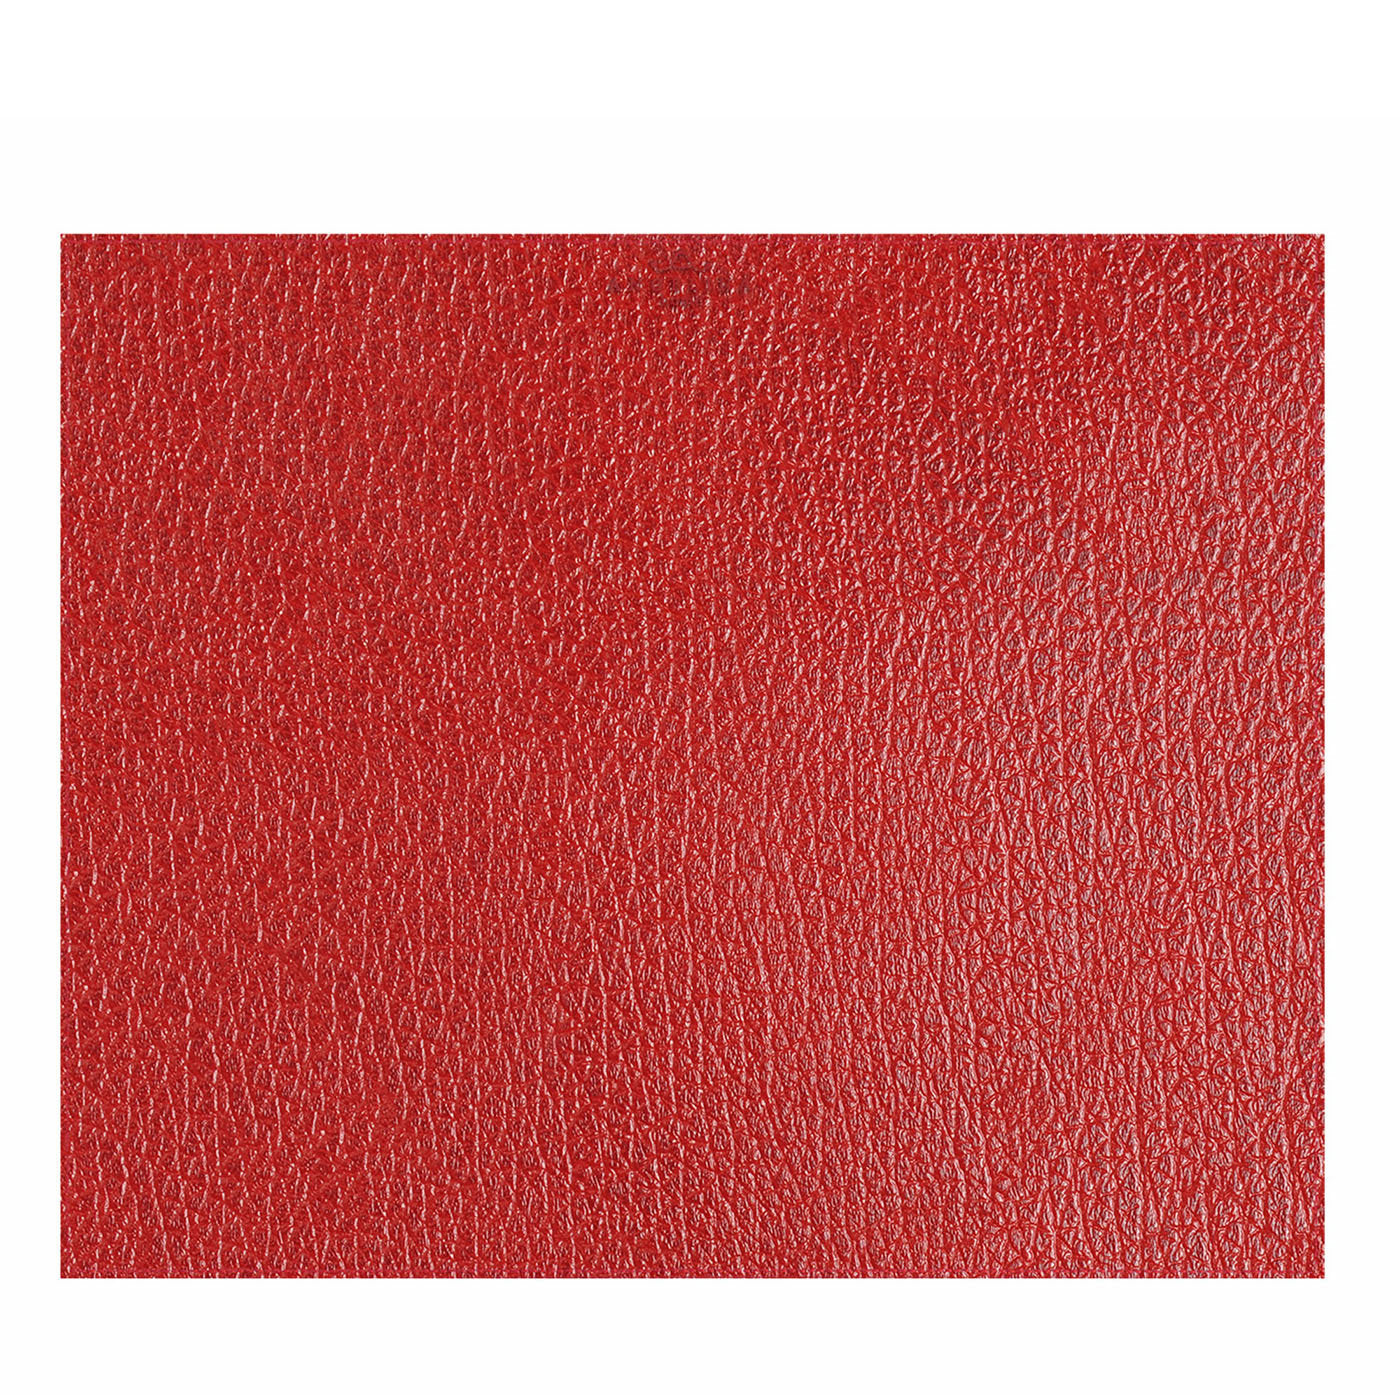 Tanzania Medium Set of 2 Rectangular Red Leather Placemats - Alternative view 3